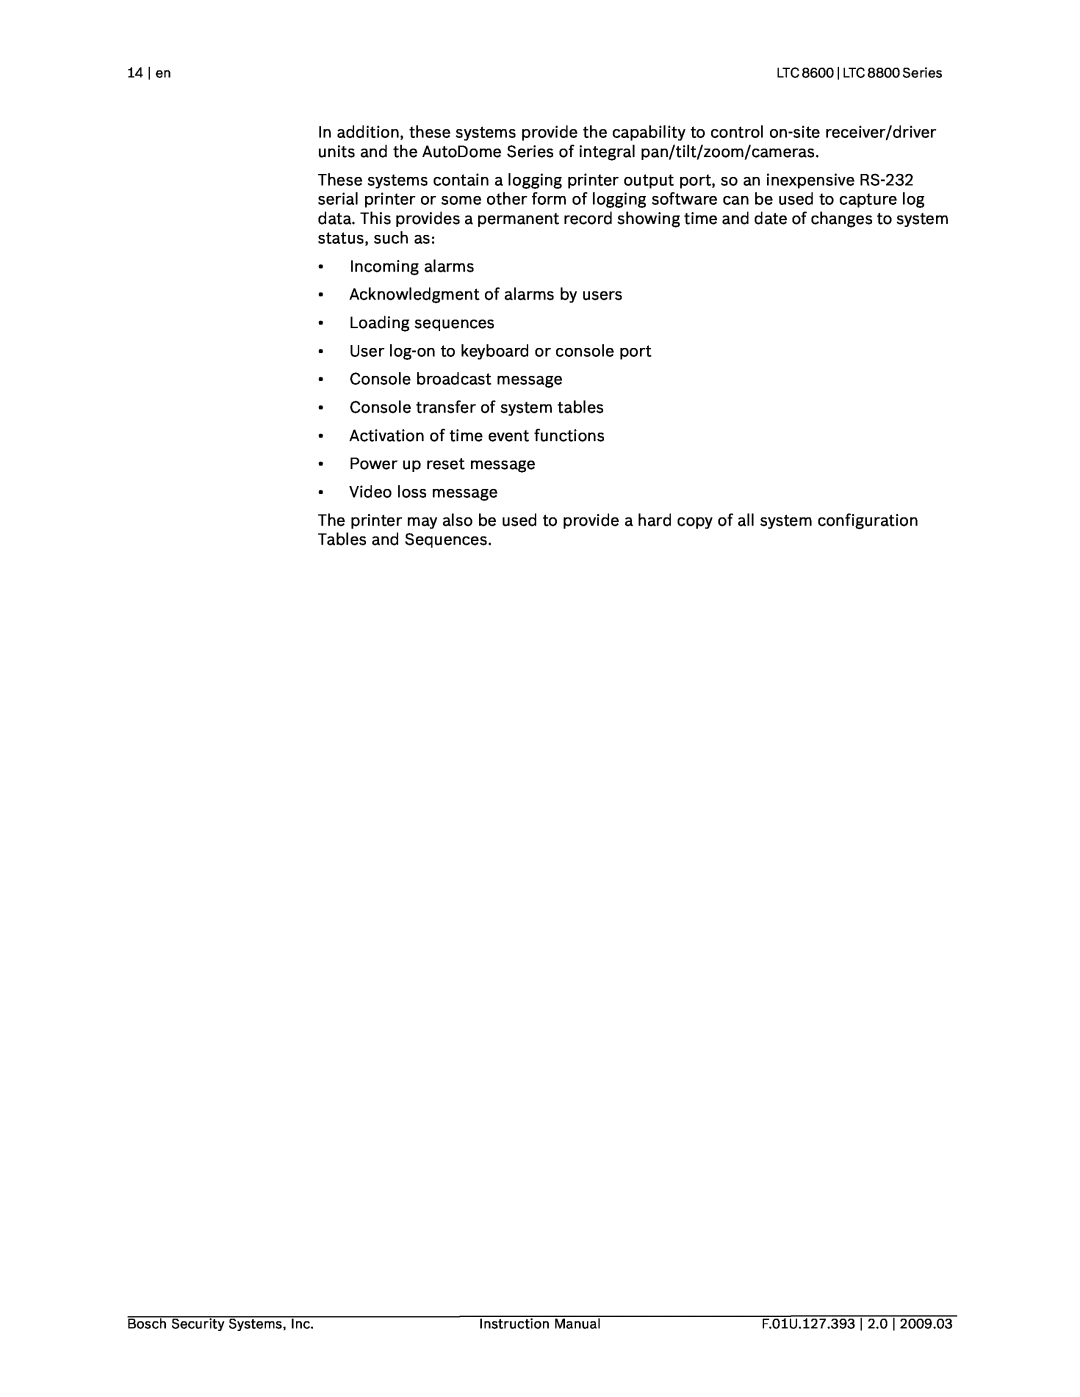 Bosch Appliances LTC 8600, LTC 8800 instruction manual •Incoming alarms 